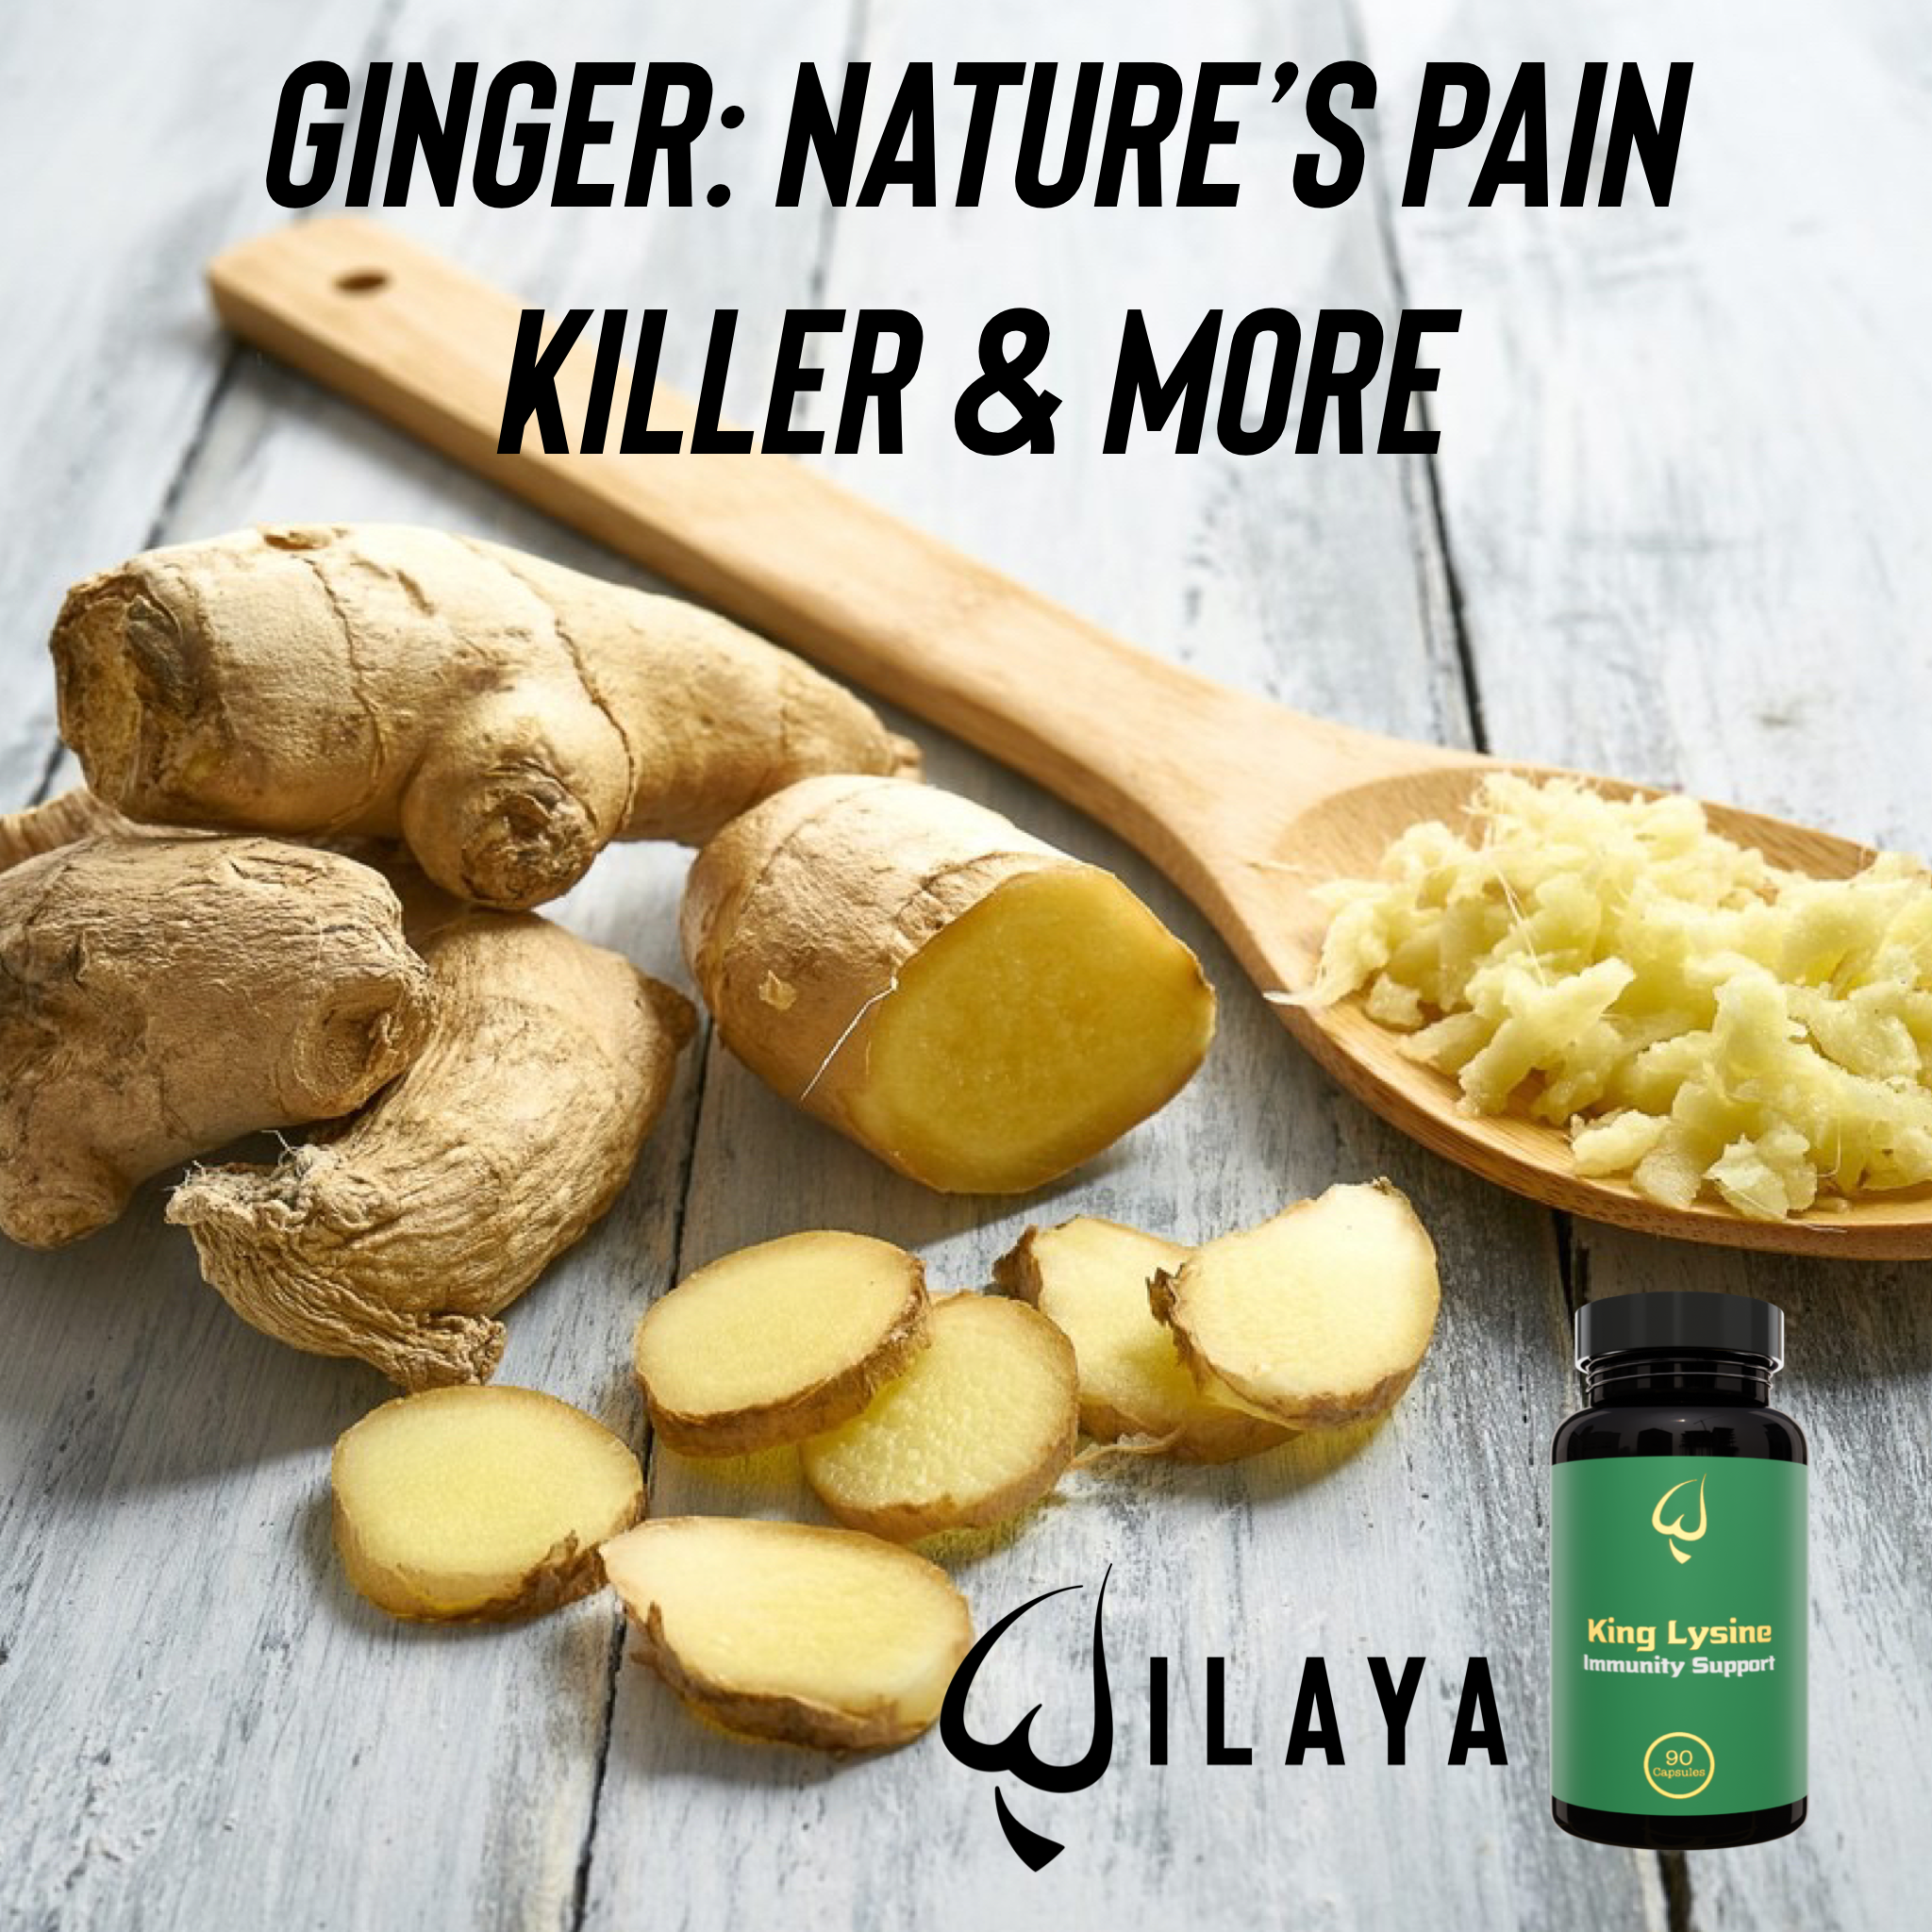 Ginger: Nature’s Pain Killer & More